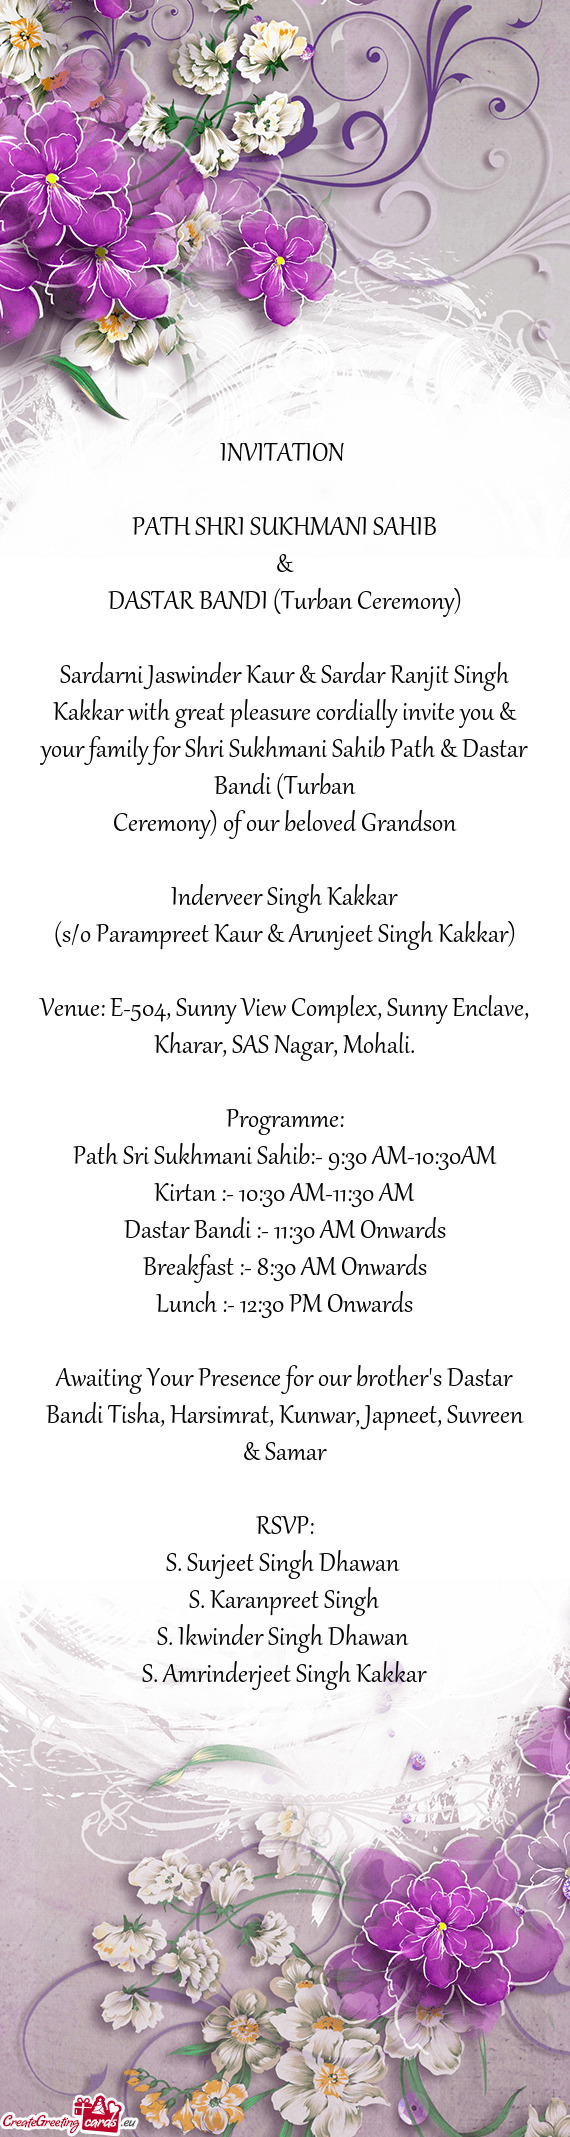 Sardarni Jaswinder Kaur & Sardar Ranjit Singh Kakkar with great pleasure cordially invite you & your